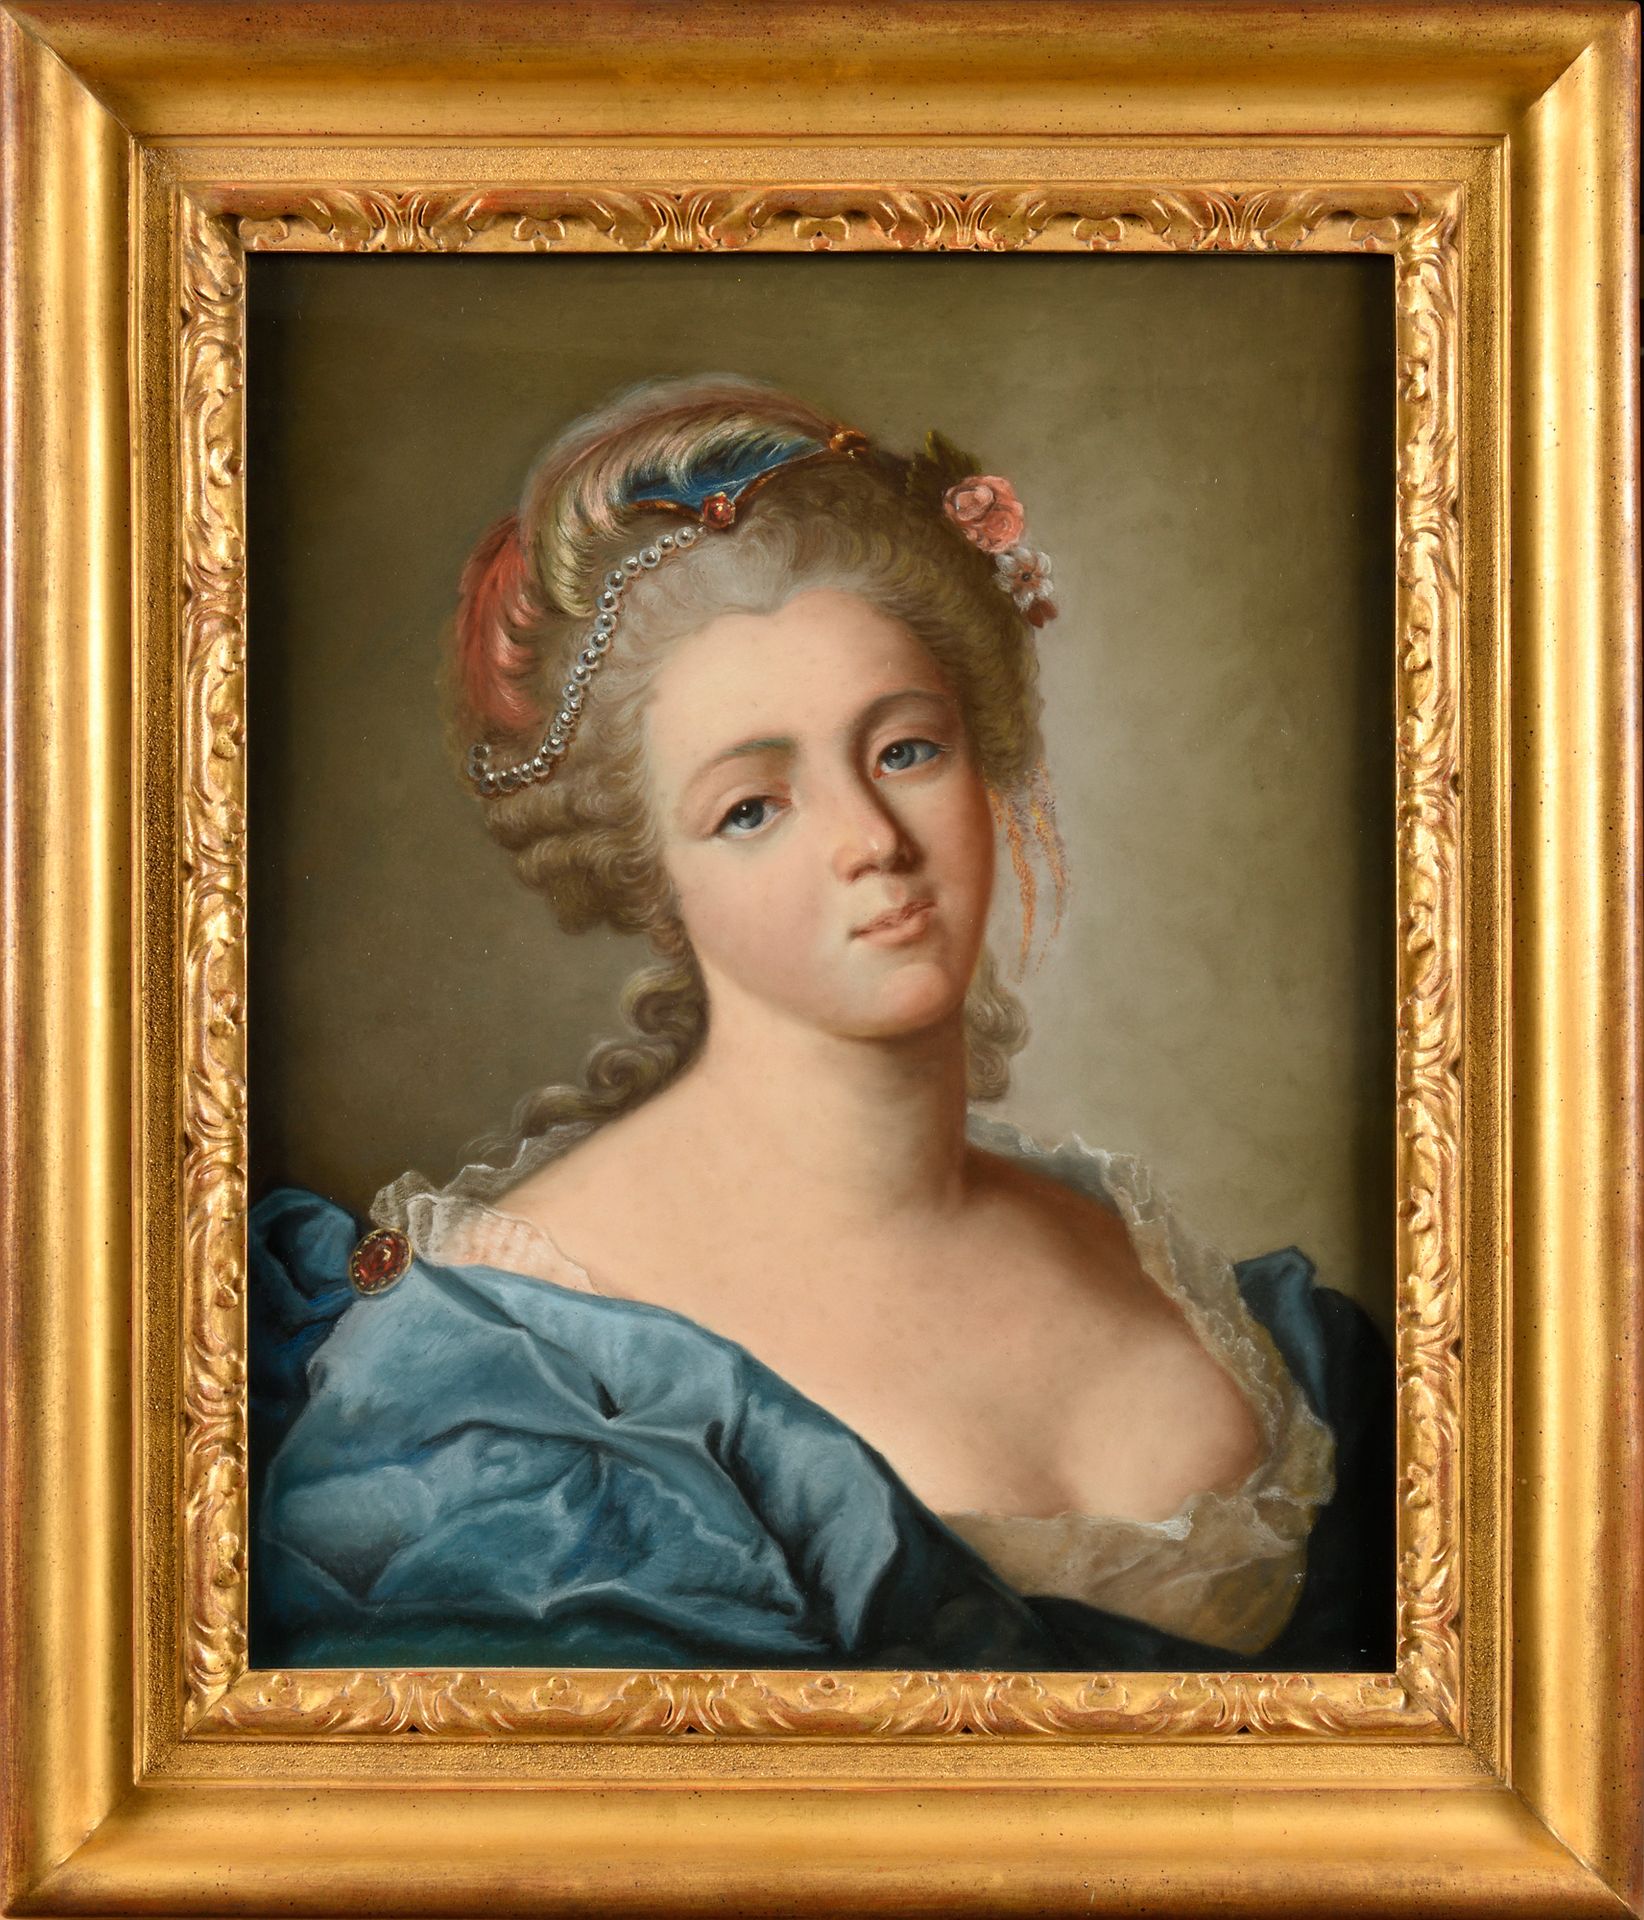 Null 法国玛丽-路易丝-维克多尔公主的画像 木板粉彩。背面有一个标签，显示 "玛丽-路易丝-维克多瓦公主，国王的妹妹"。玻璃框架 53 x 43.5 cm